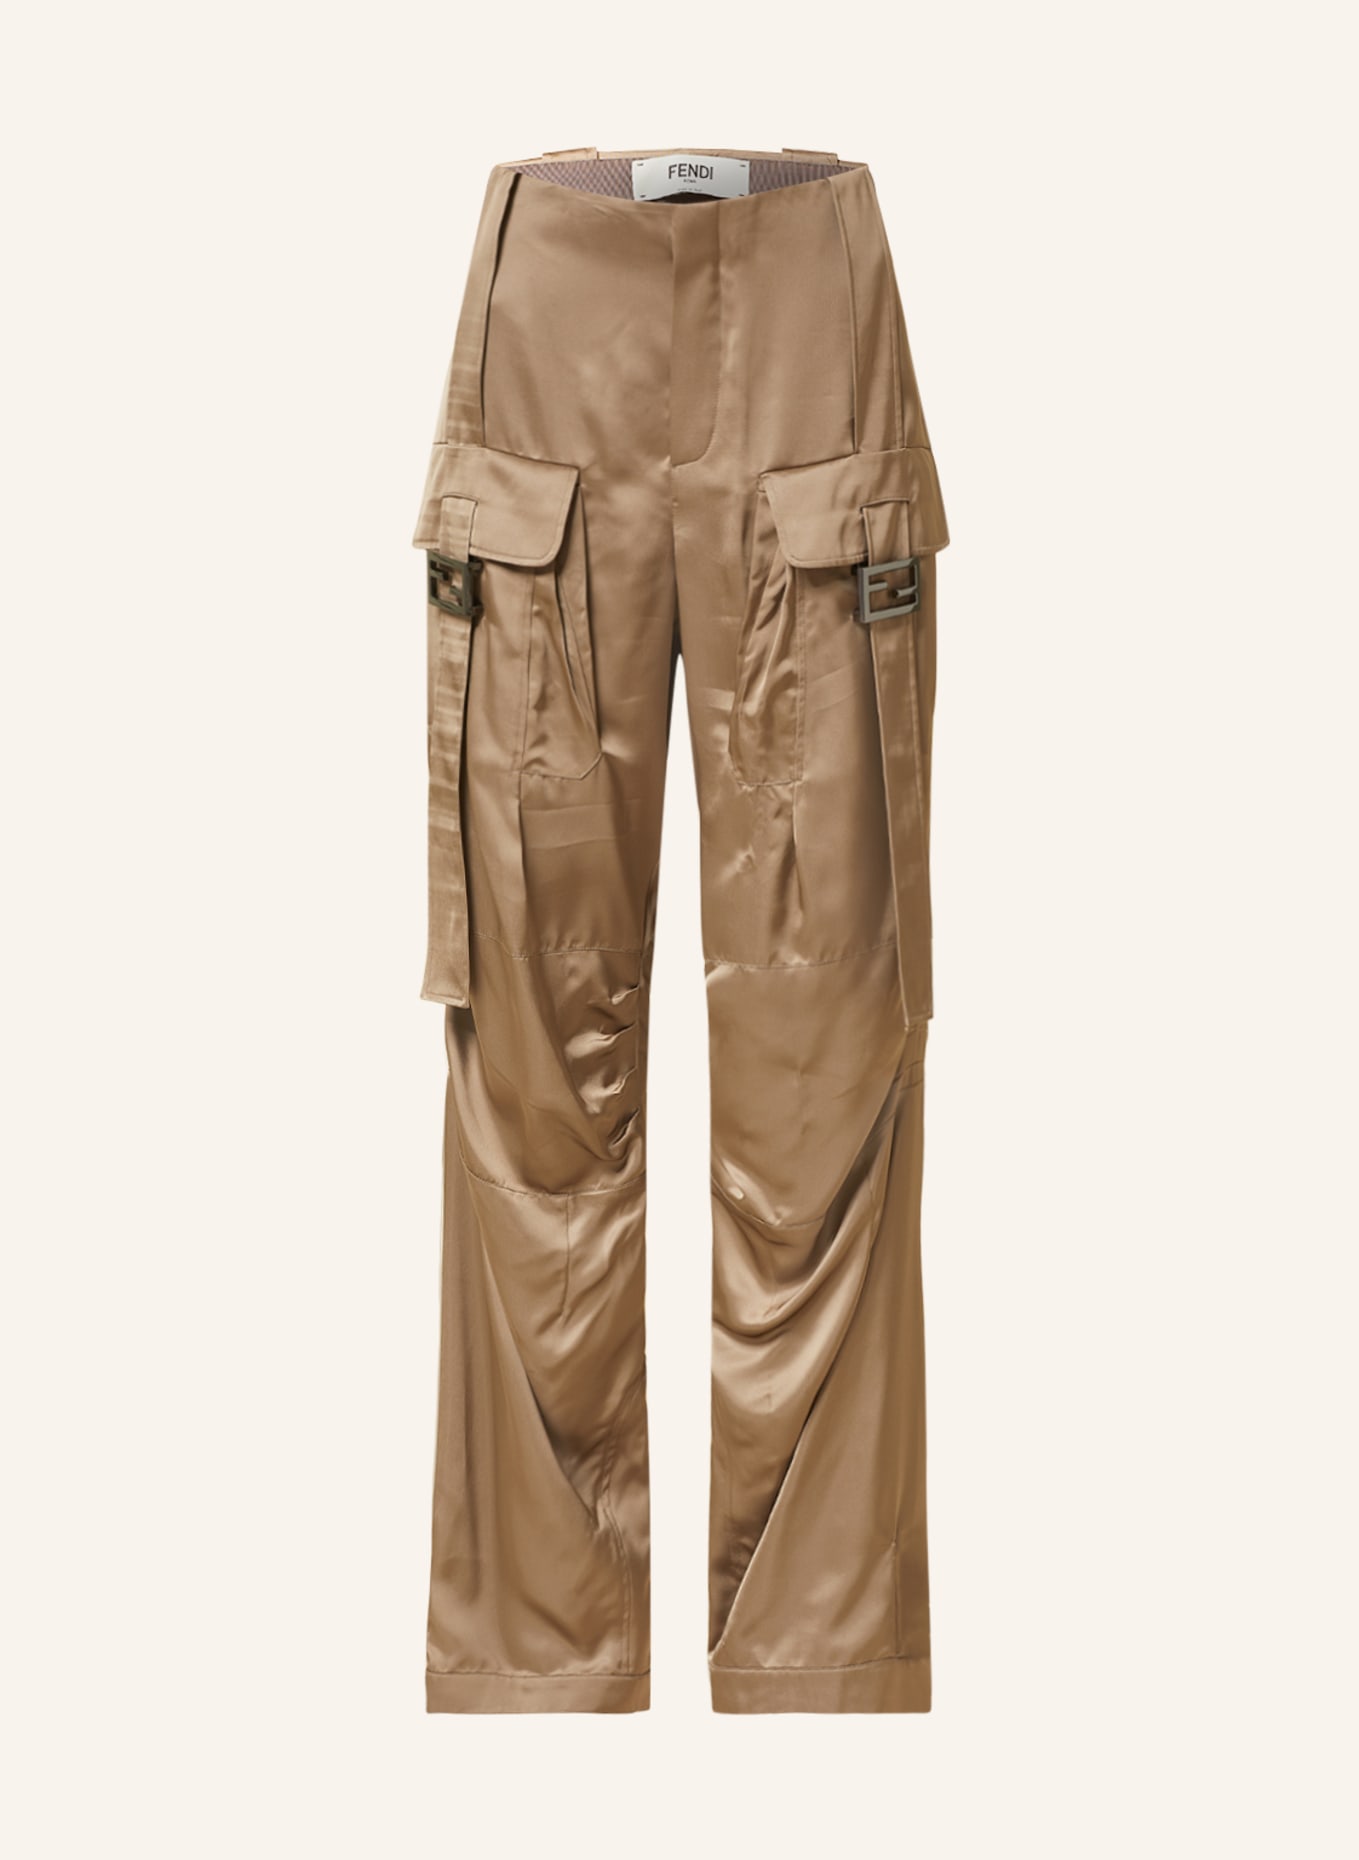 Men's 6 Pocket New Style Cargo Pant, Cotton Cargo Pants, Stylish Cargo Pants,  Brown Cargo Pant,